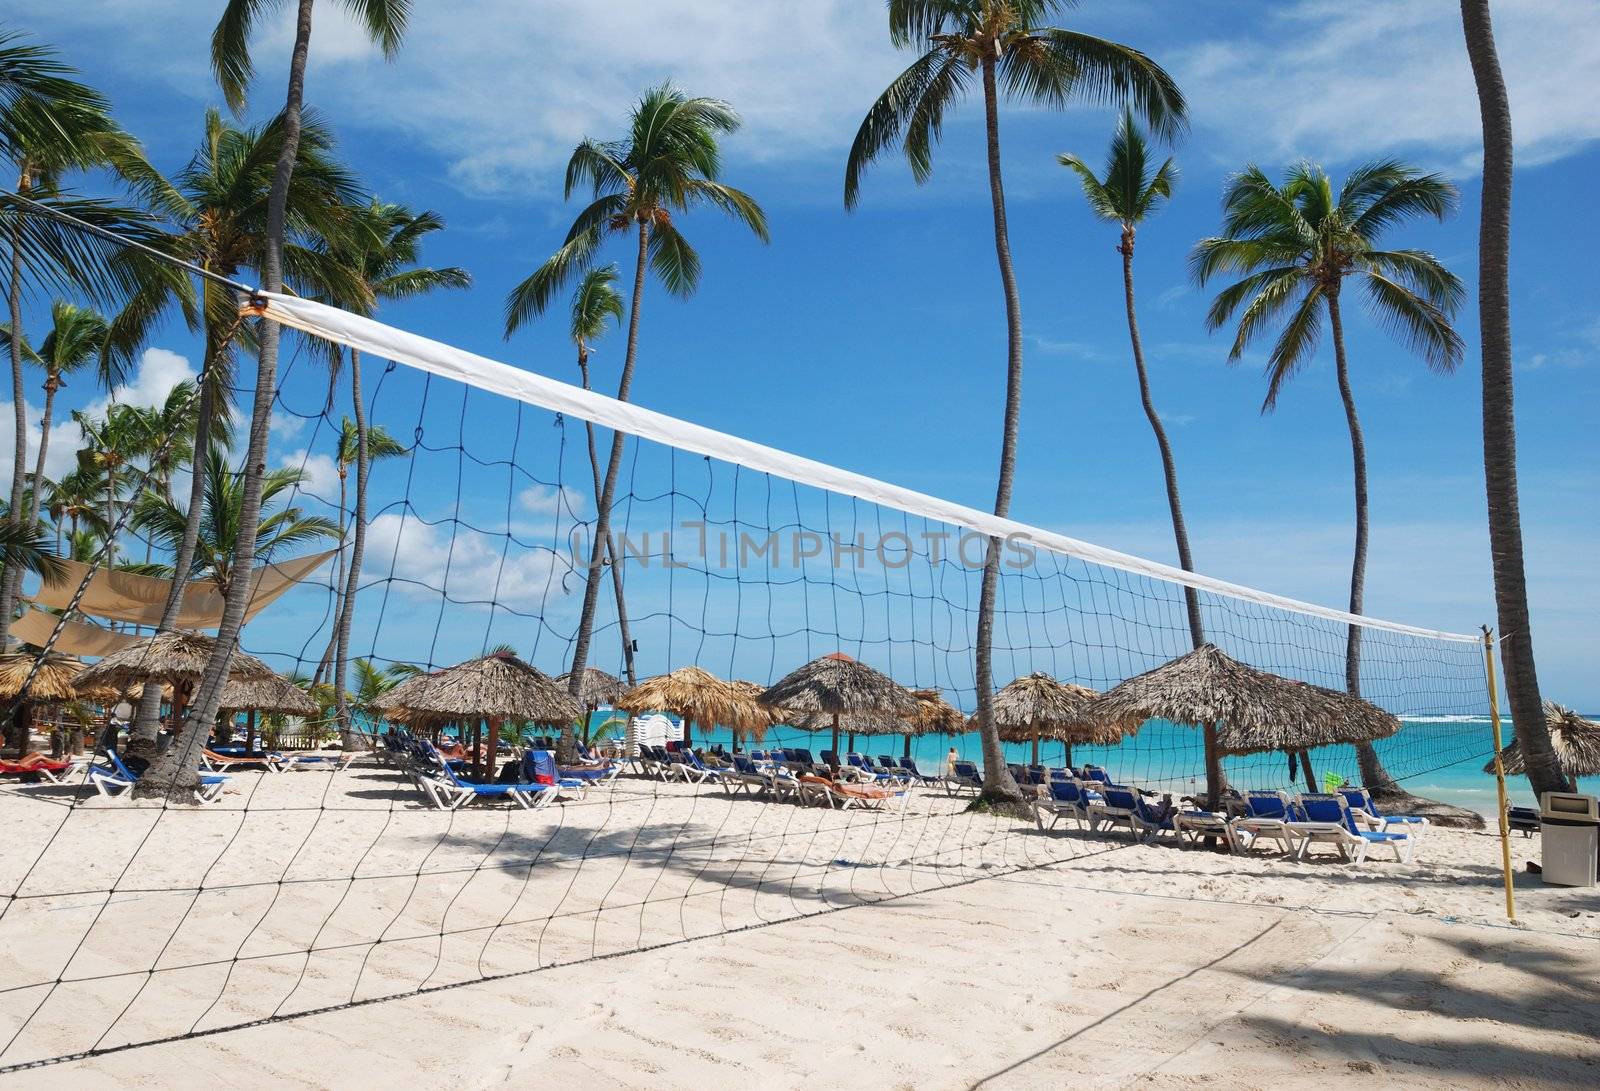 Beach Volleyball Net on beautiful caribbean beach in Dominican Republic